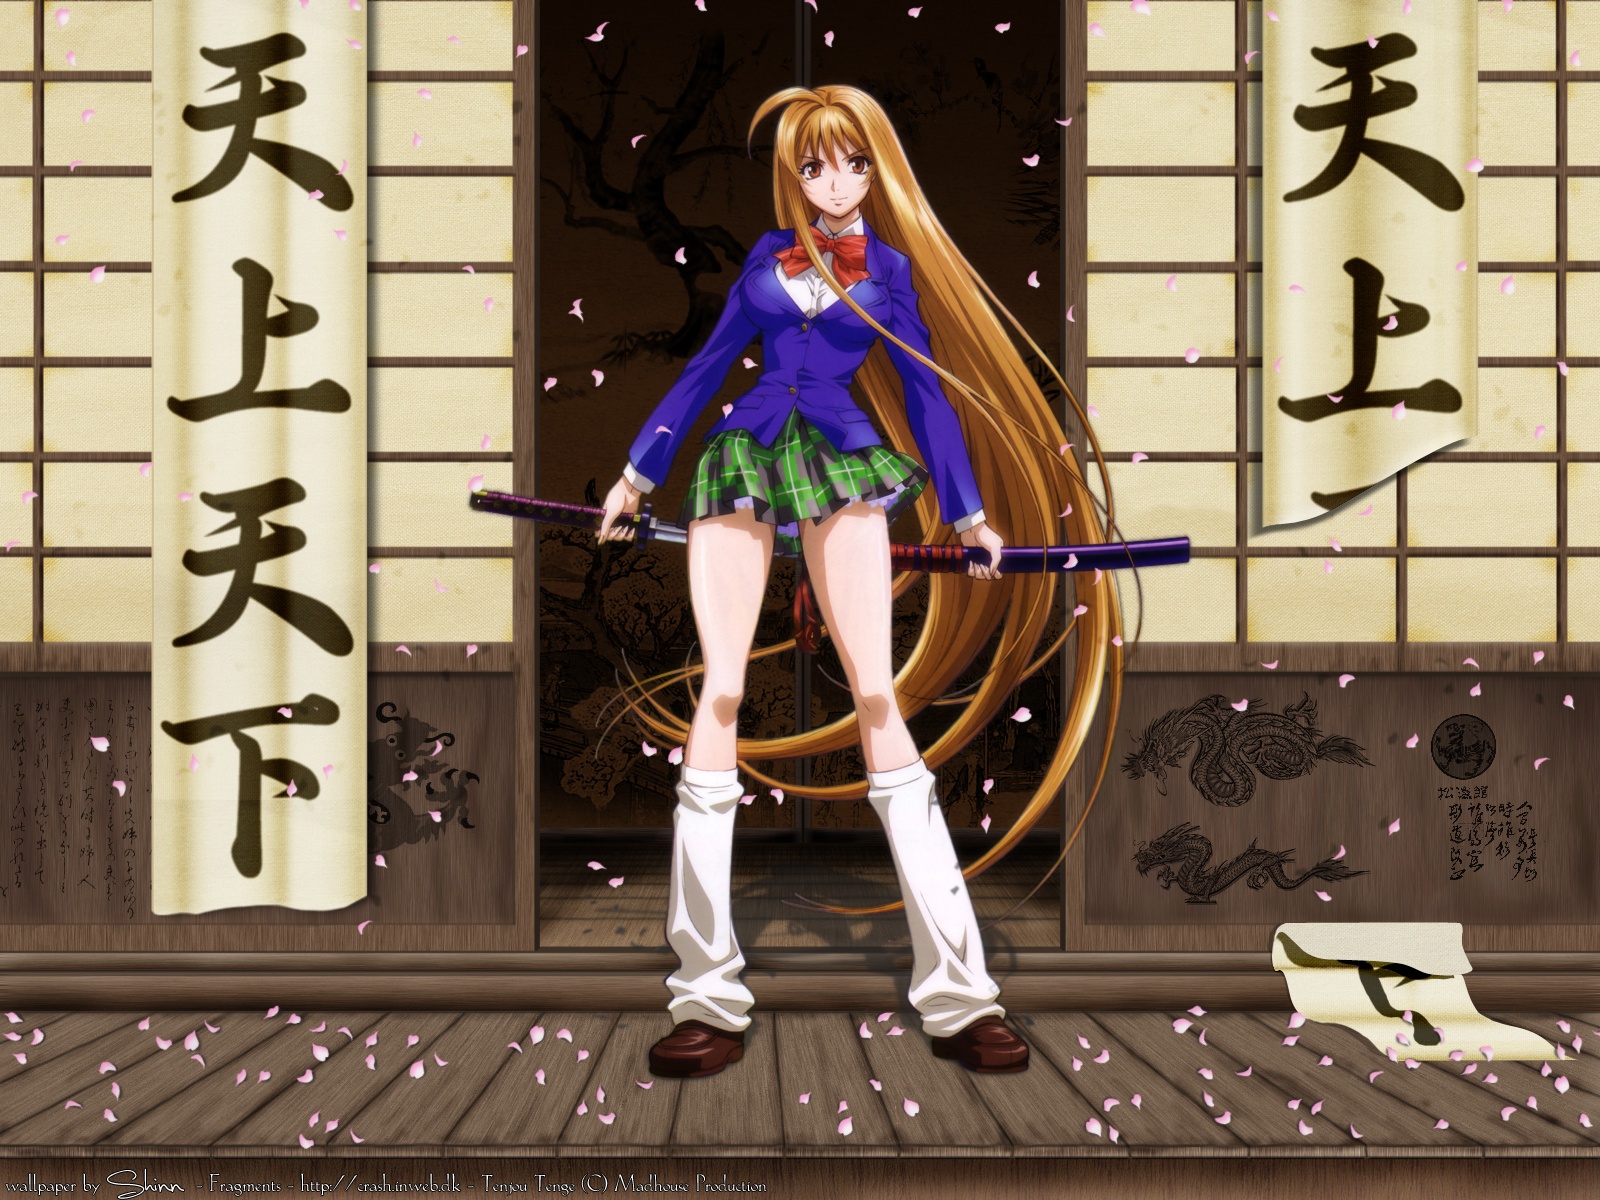 Tenjou Tenge Figure Series Part 2: Maya Natsume Uniform Ver. - My